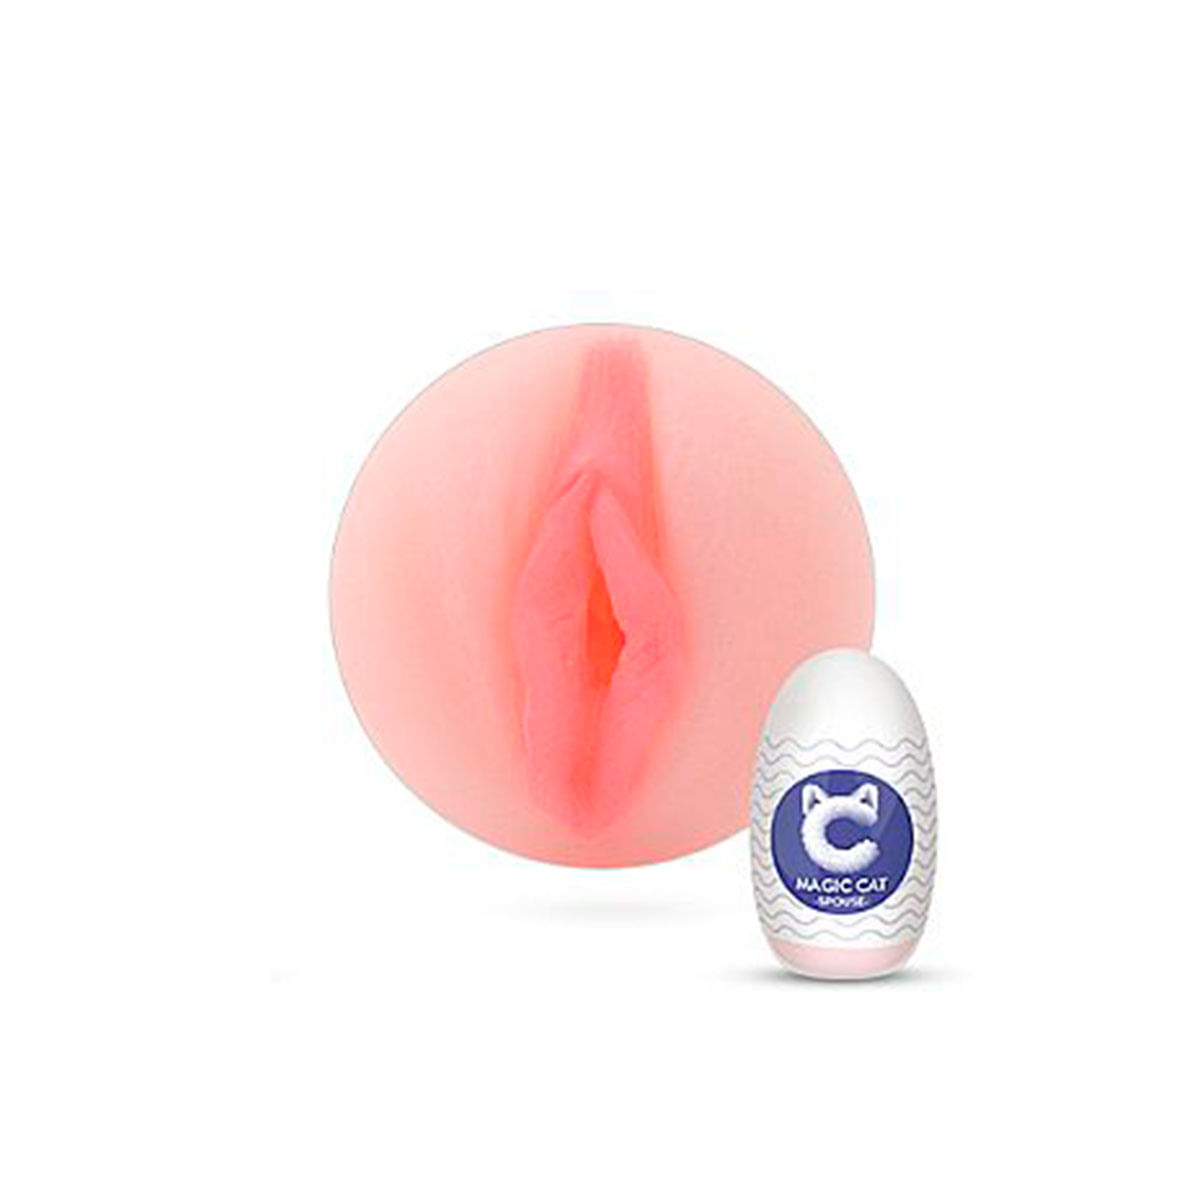 Magic Cat Spouse Egg em CyberSkin Formato Vagina Sexy Import